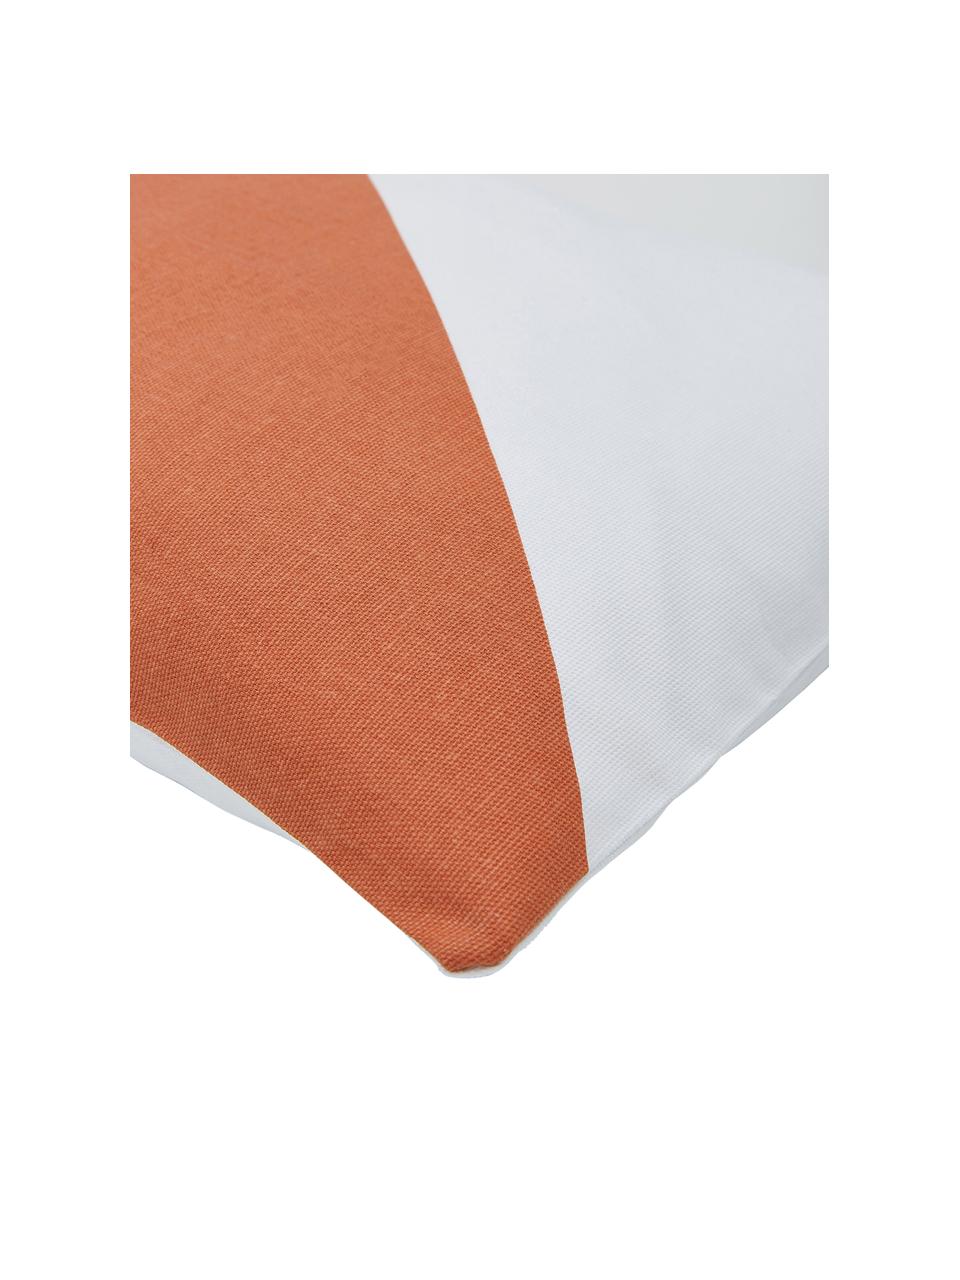 Federa arredo a strisce color arancione/bianco Ren, 100% cotone, Bianco, arancione, Larg. 30 x Lung. 50 cm